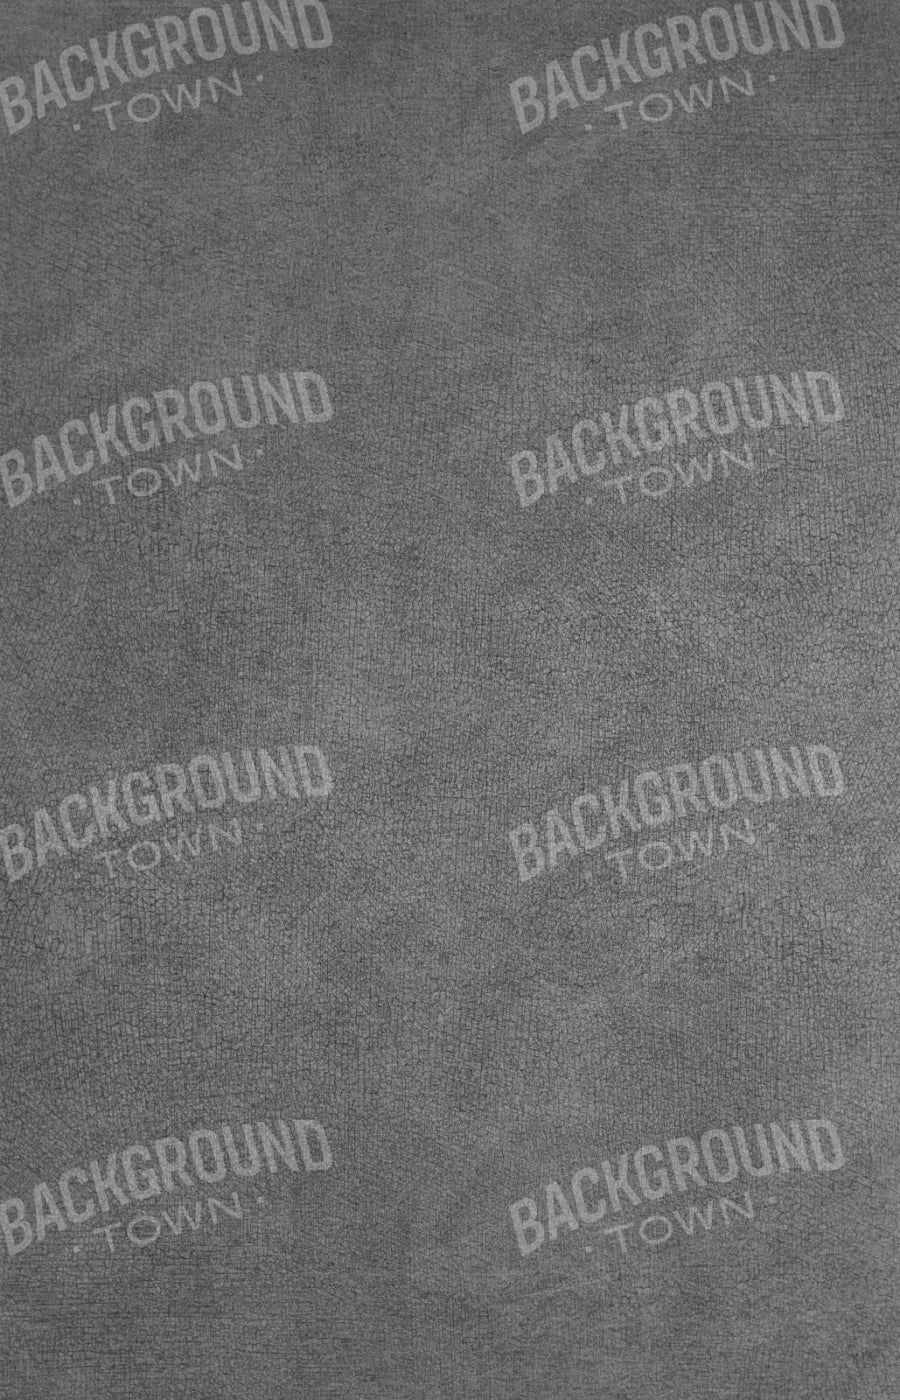 Neutral Gray 8X12 Ultracloth ( 96 X 144 Inch ) Backdrop